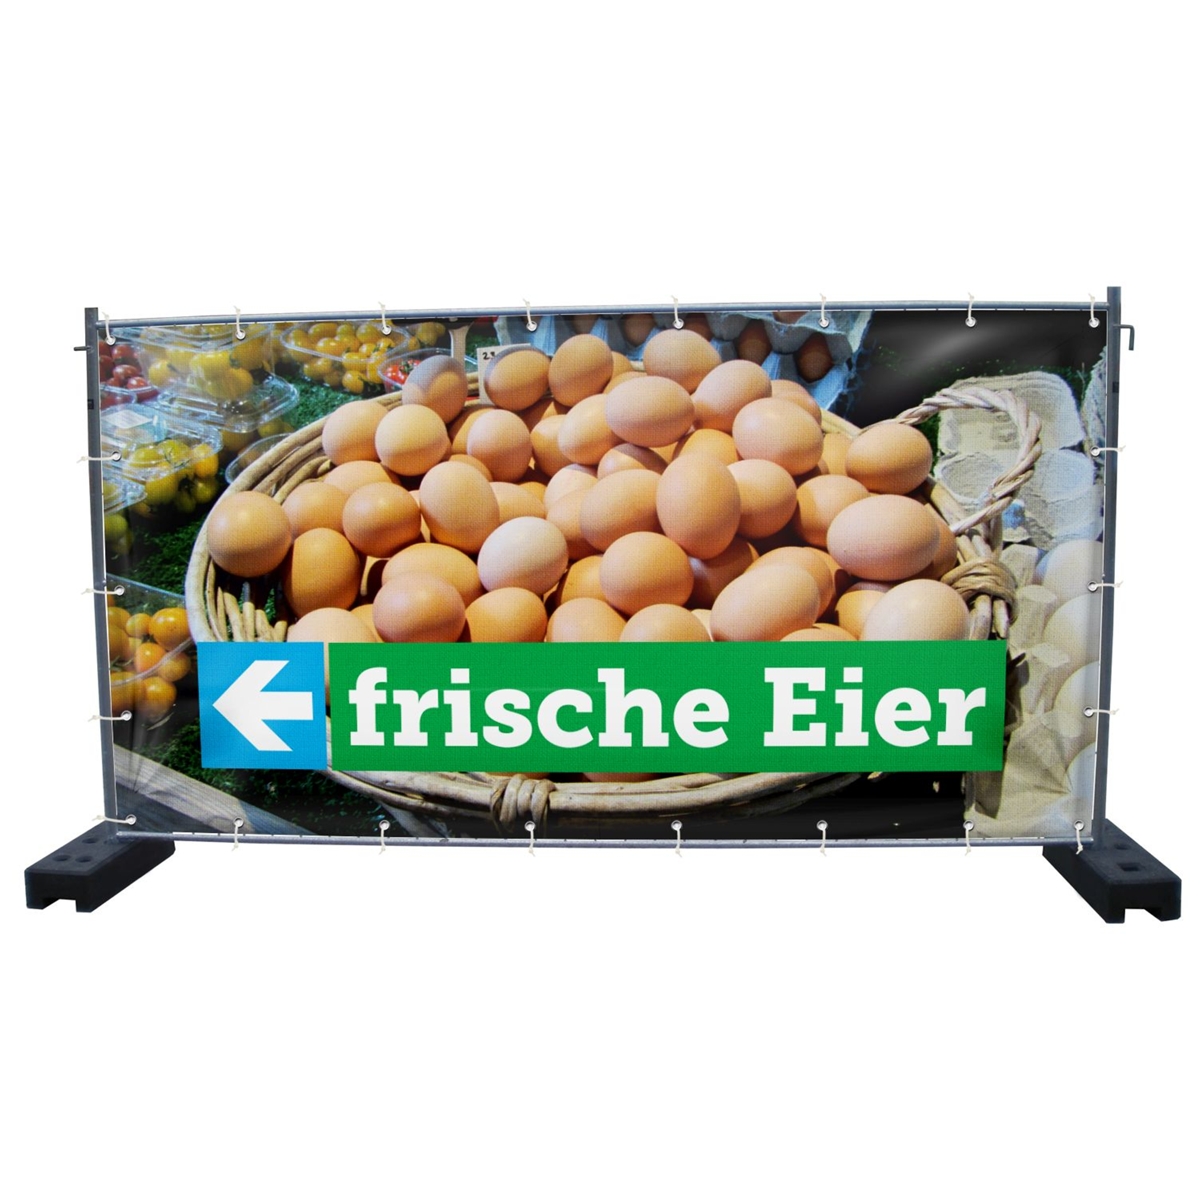 340 x 173 cm | Frische Eier Bauzaunbanner (3220)